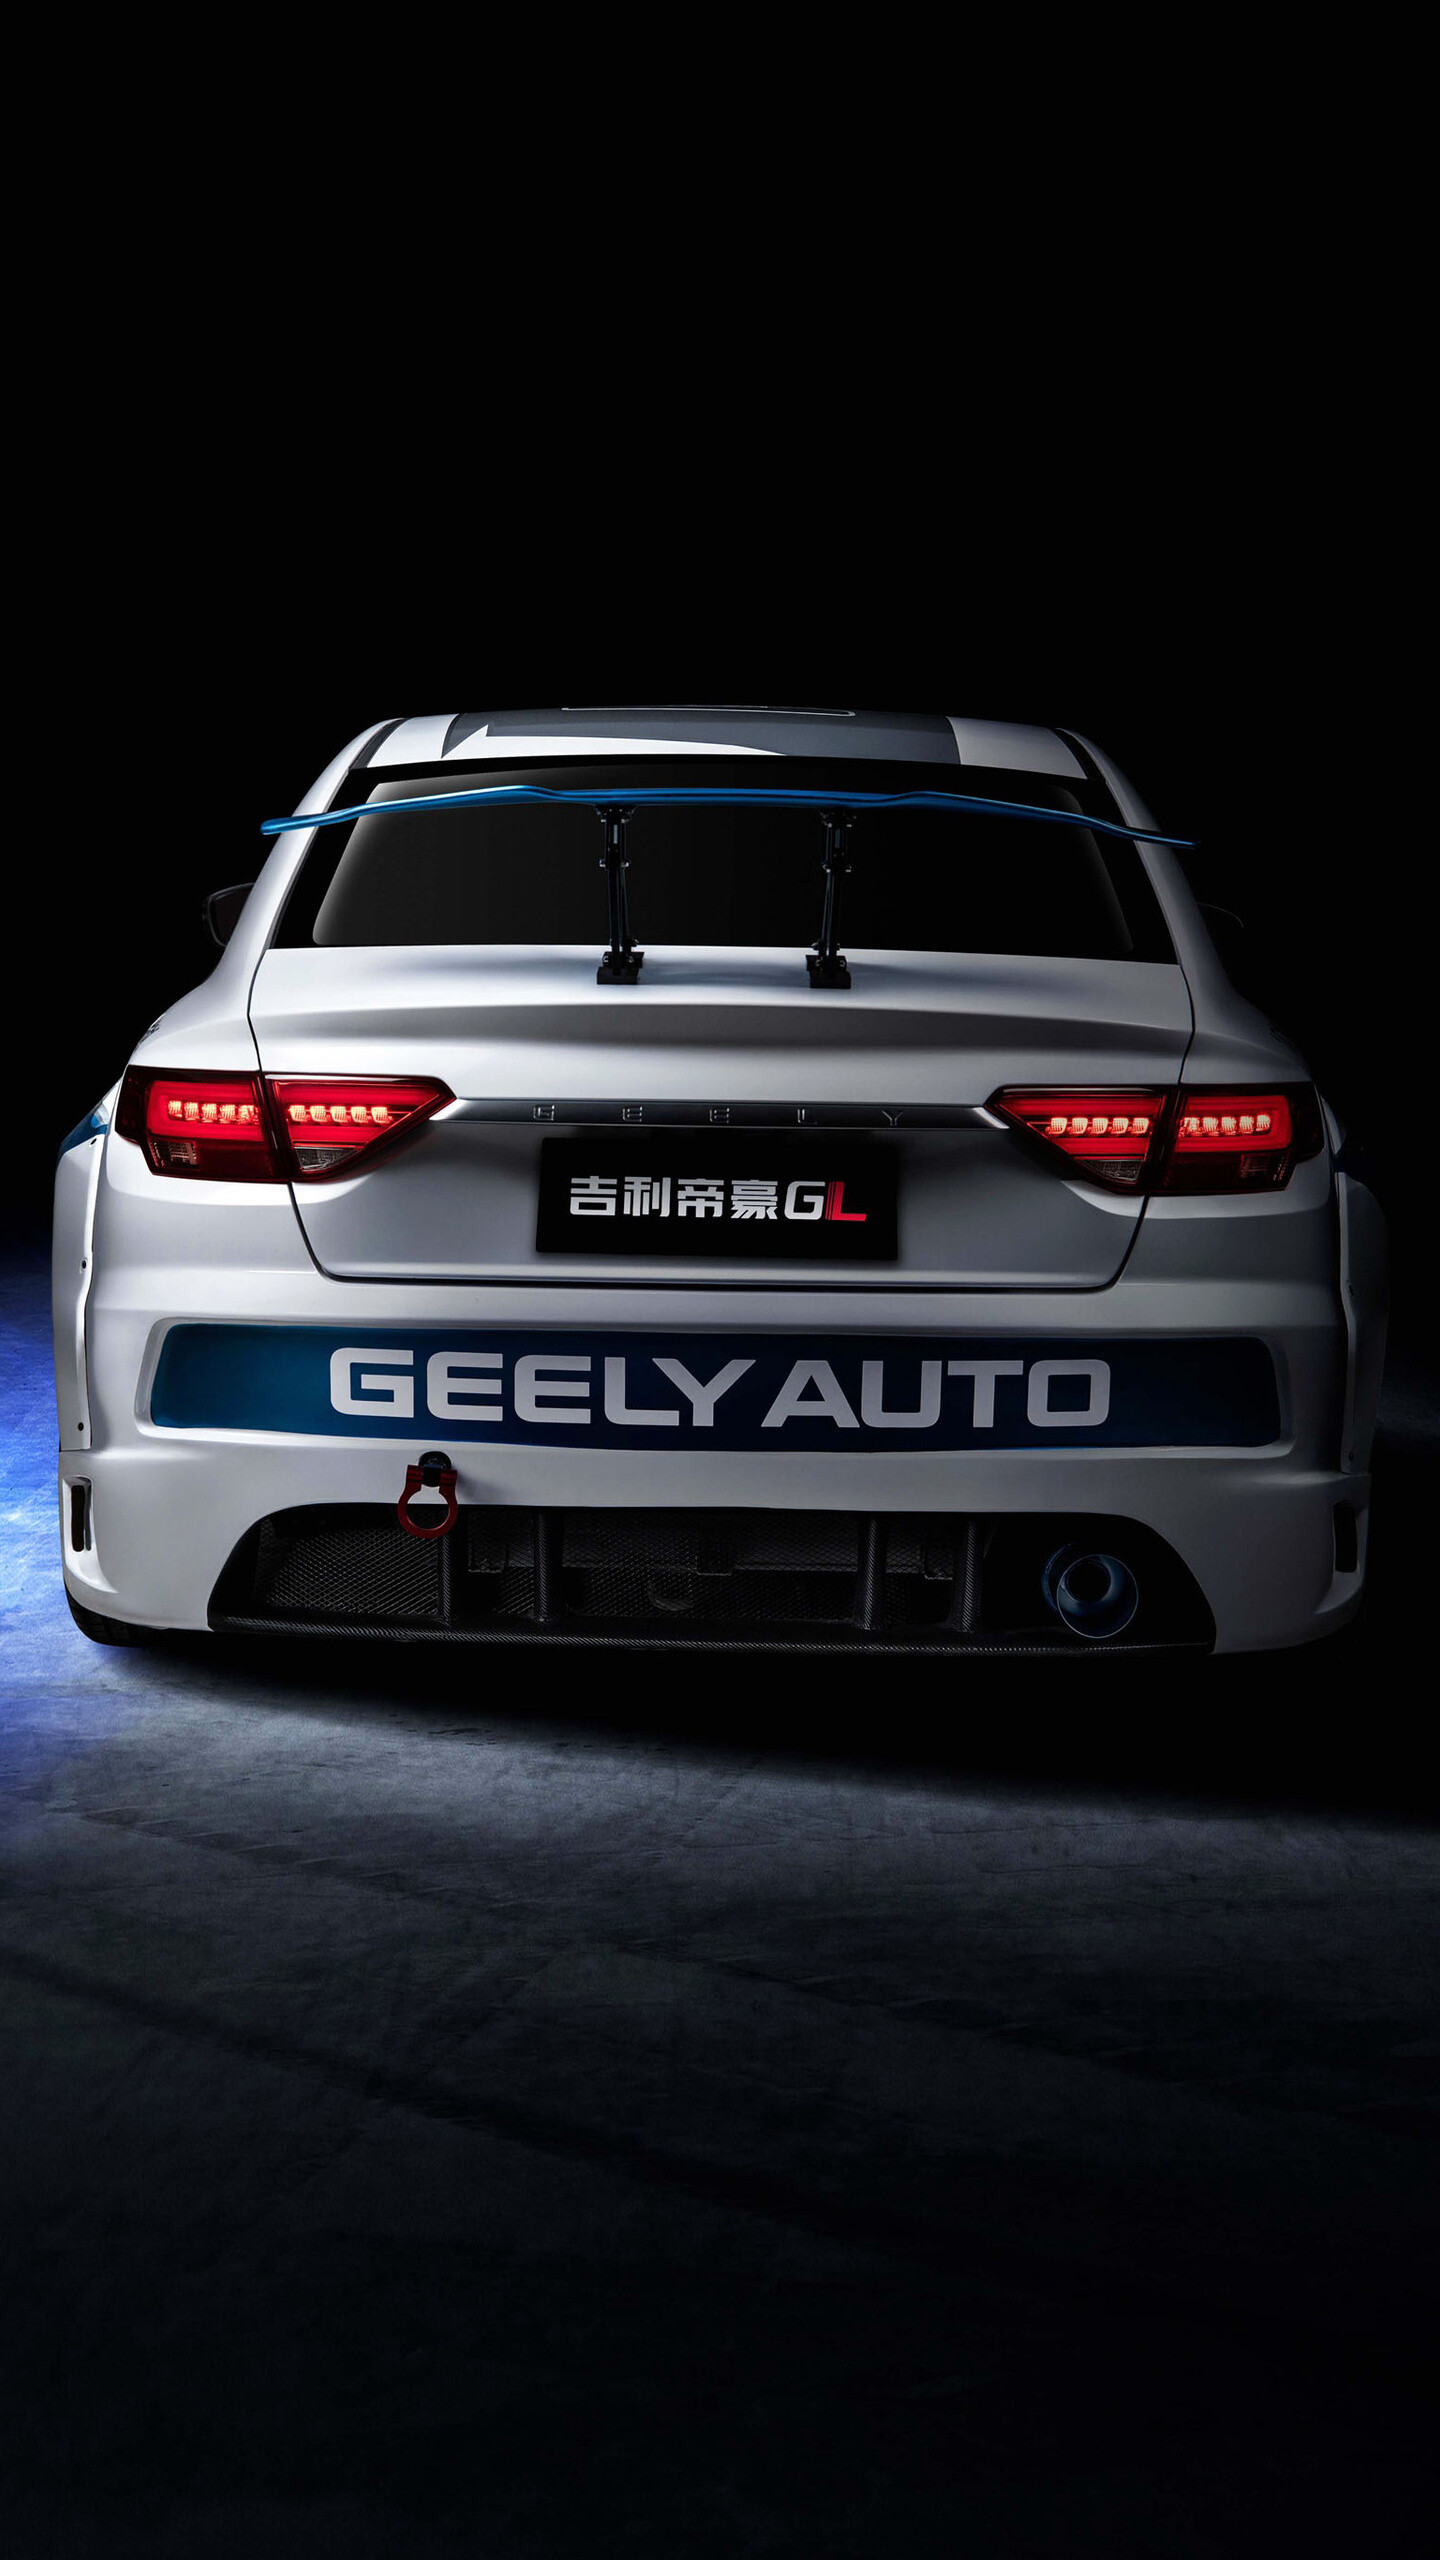 Geely: Model Emgrand GL, Race Car, The company was founded 6 November 1986 by Li Shufu. 1440x2560 HD Wallpaper.